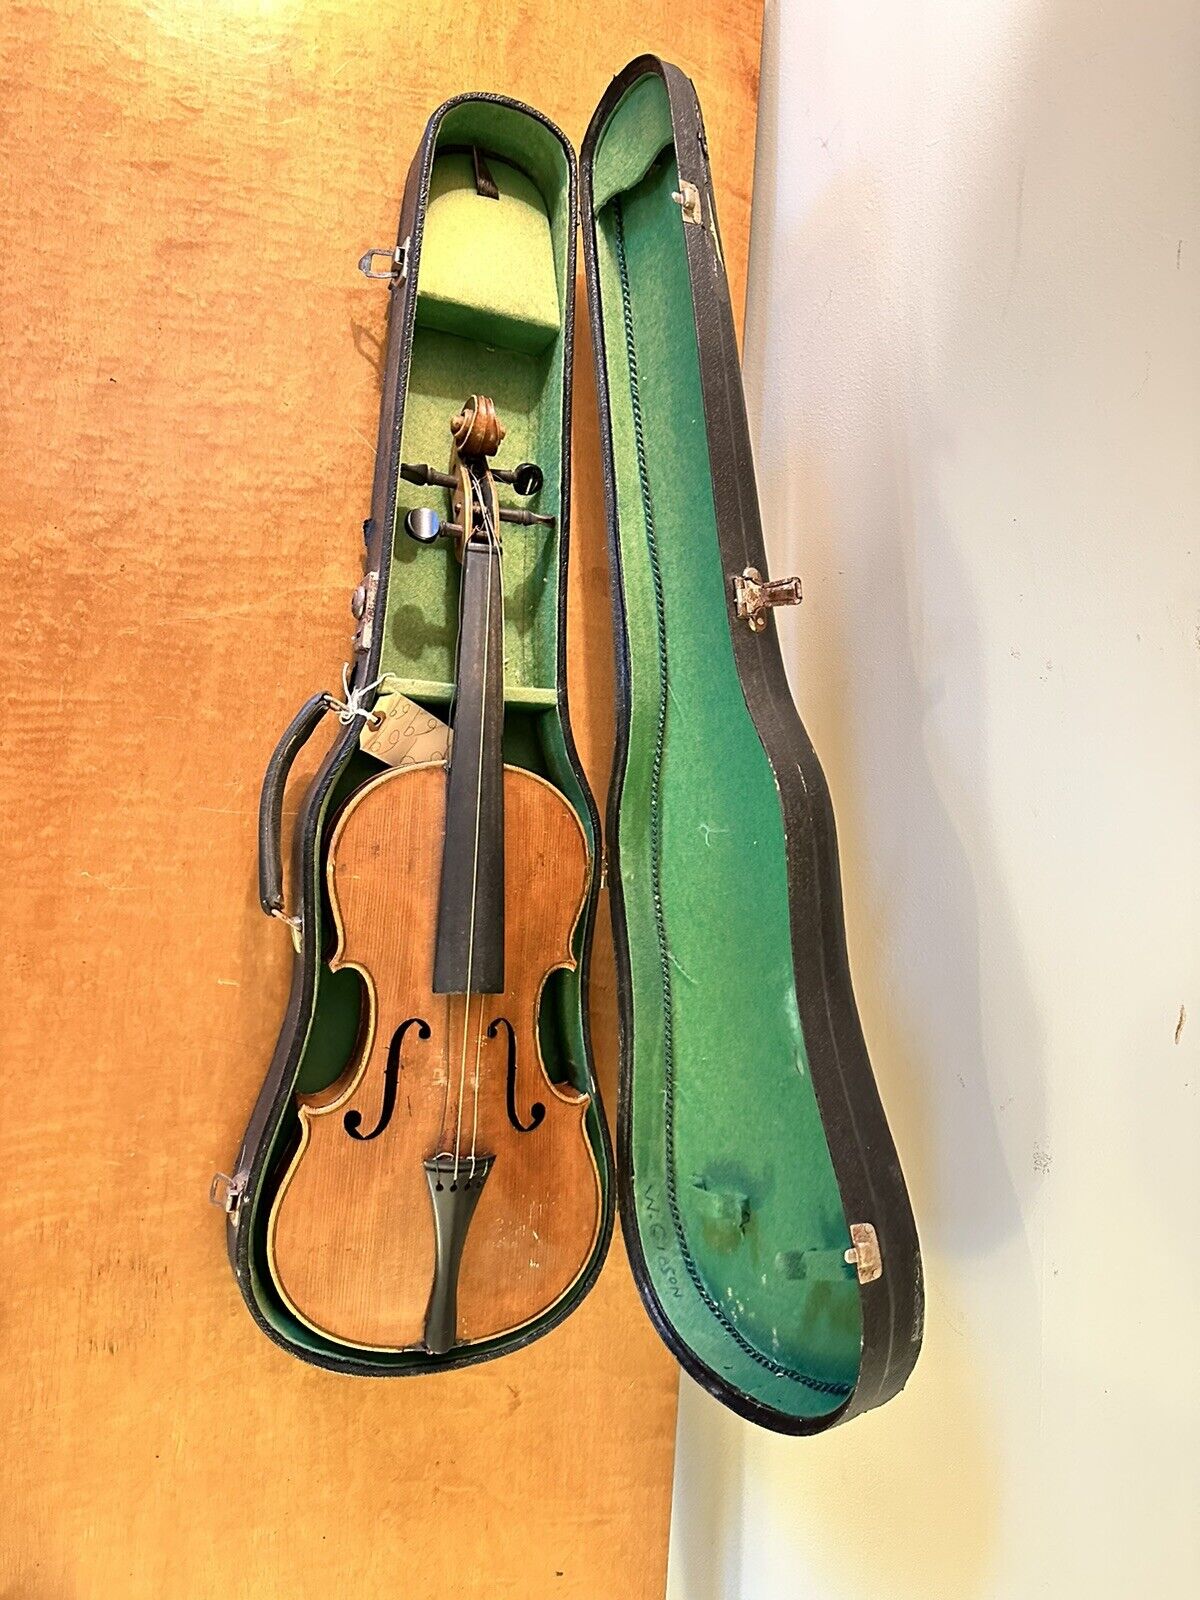 Antique String Violin #2 Vintage